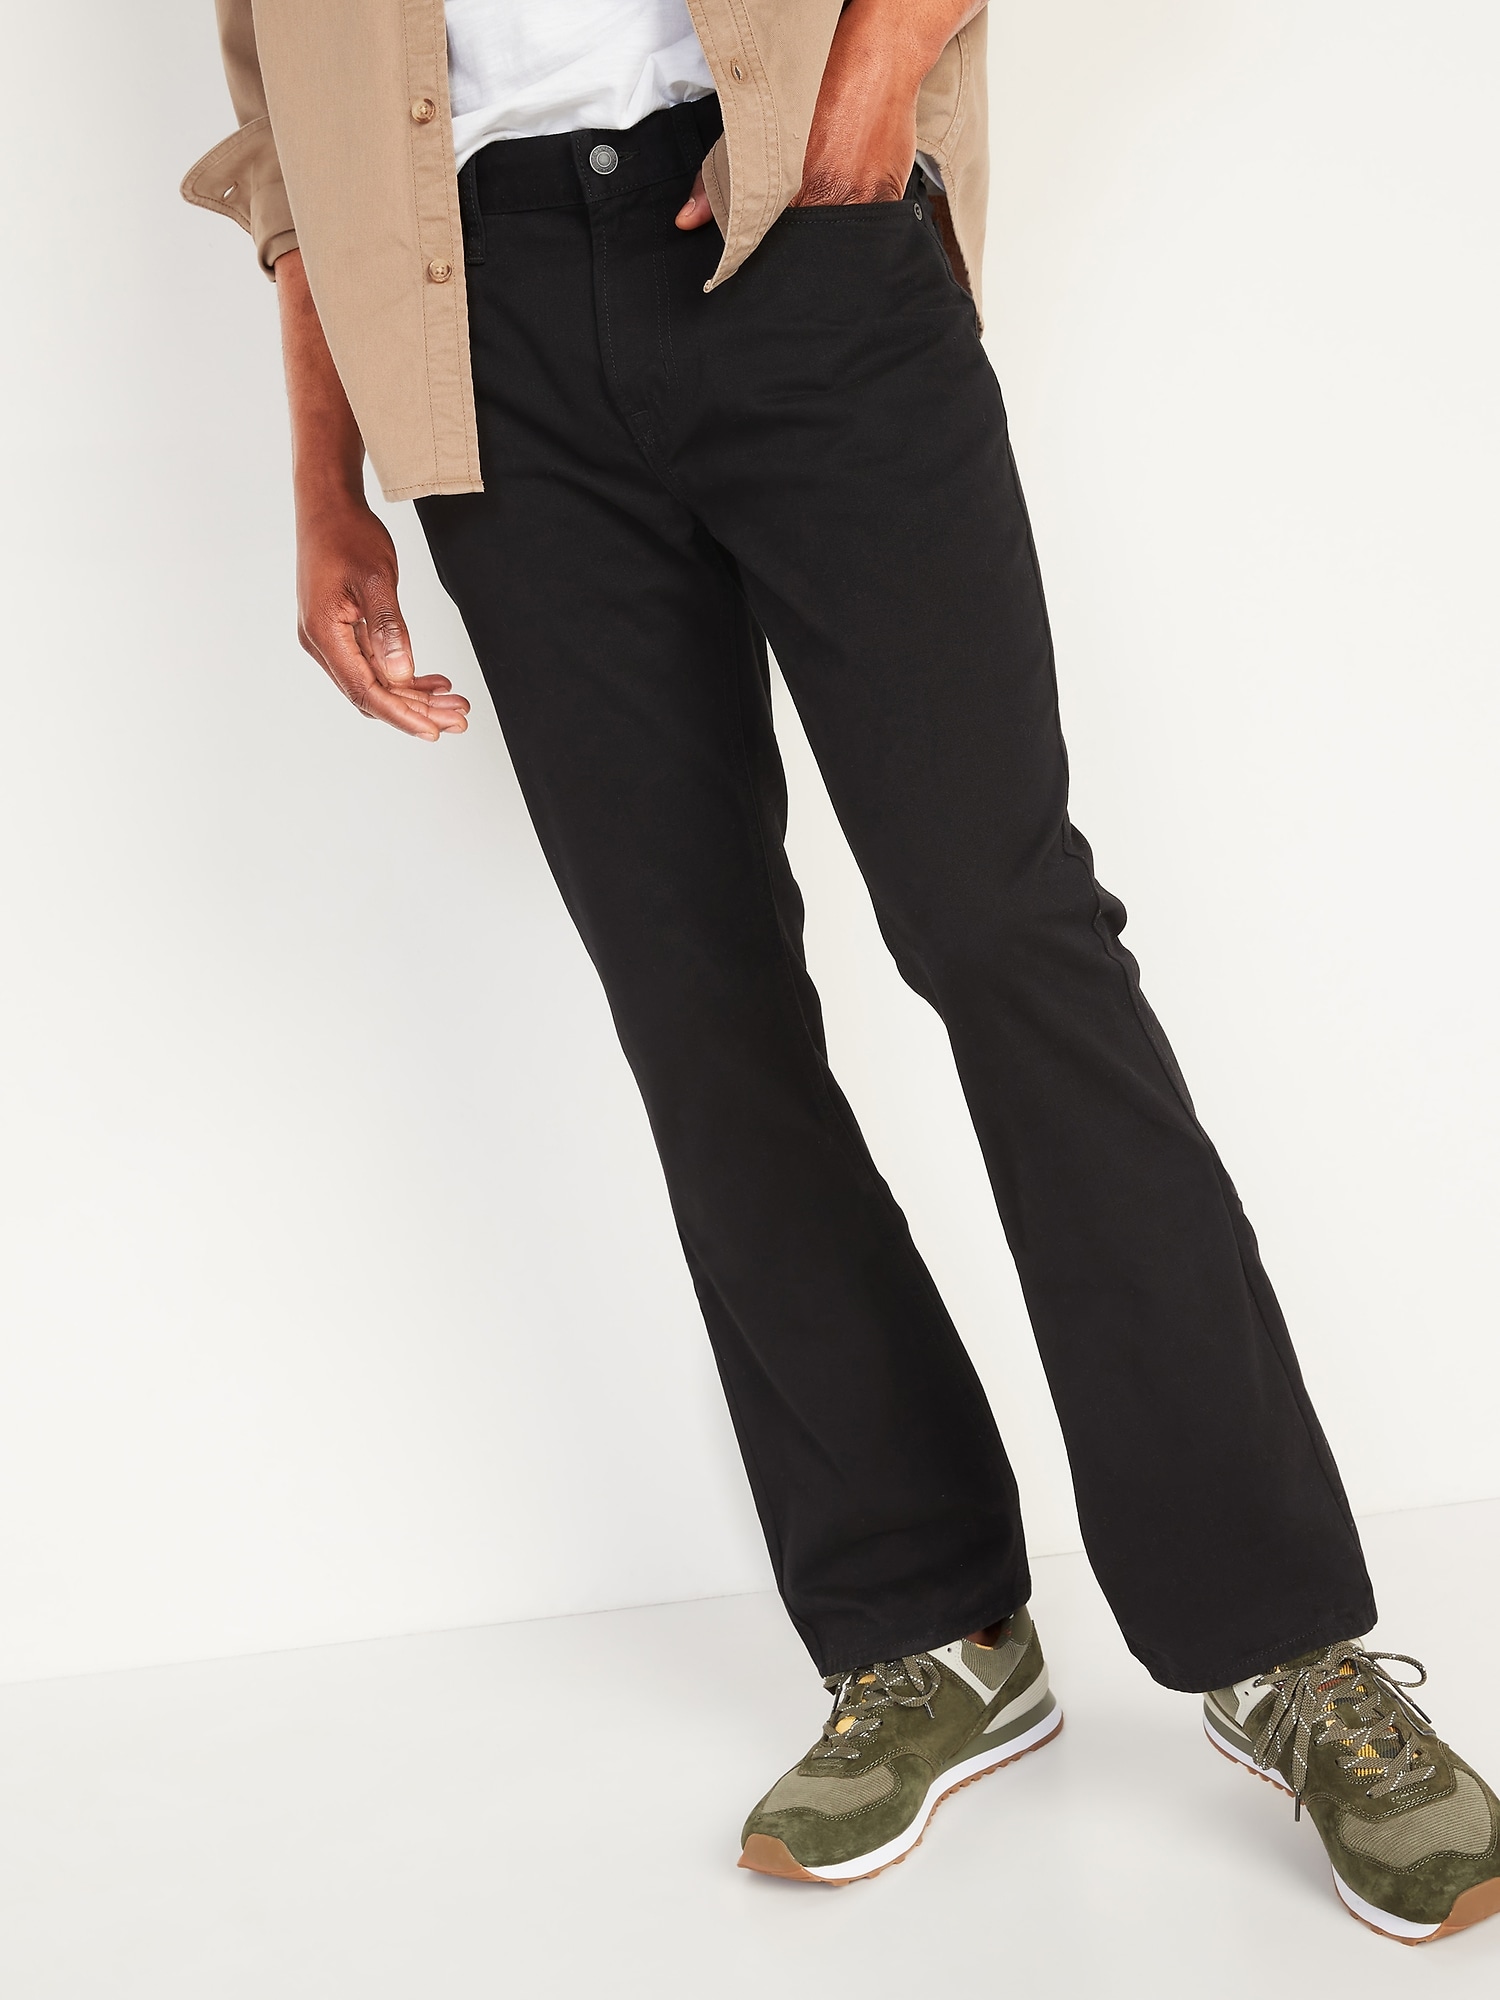 Boot-Cut Rigid Non-Stretch Black Jeans for Men